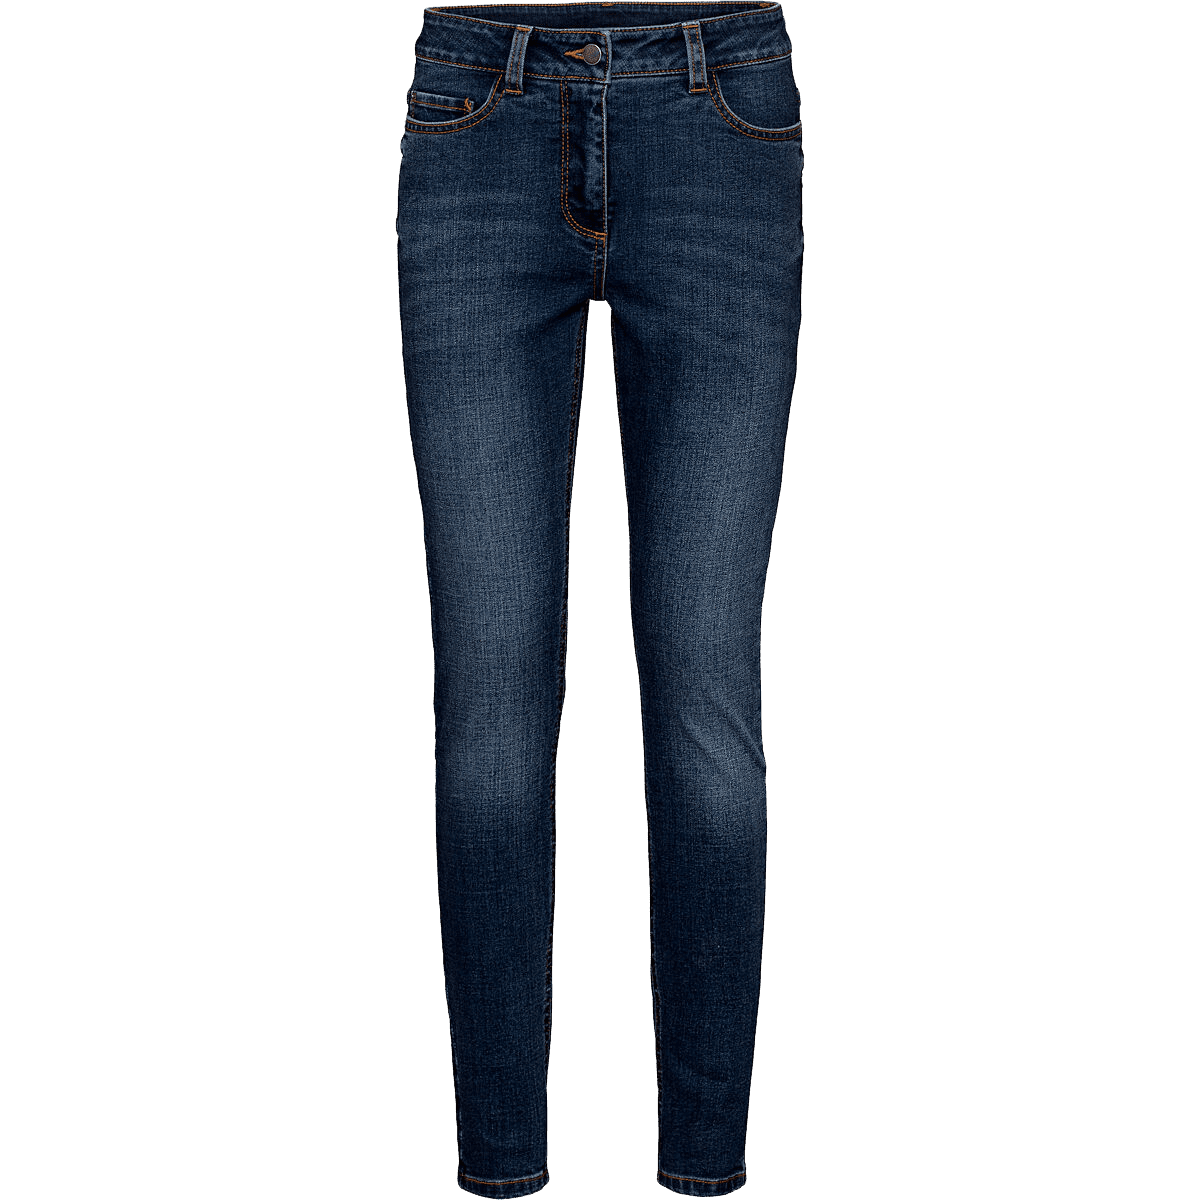 Midrise Jeans